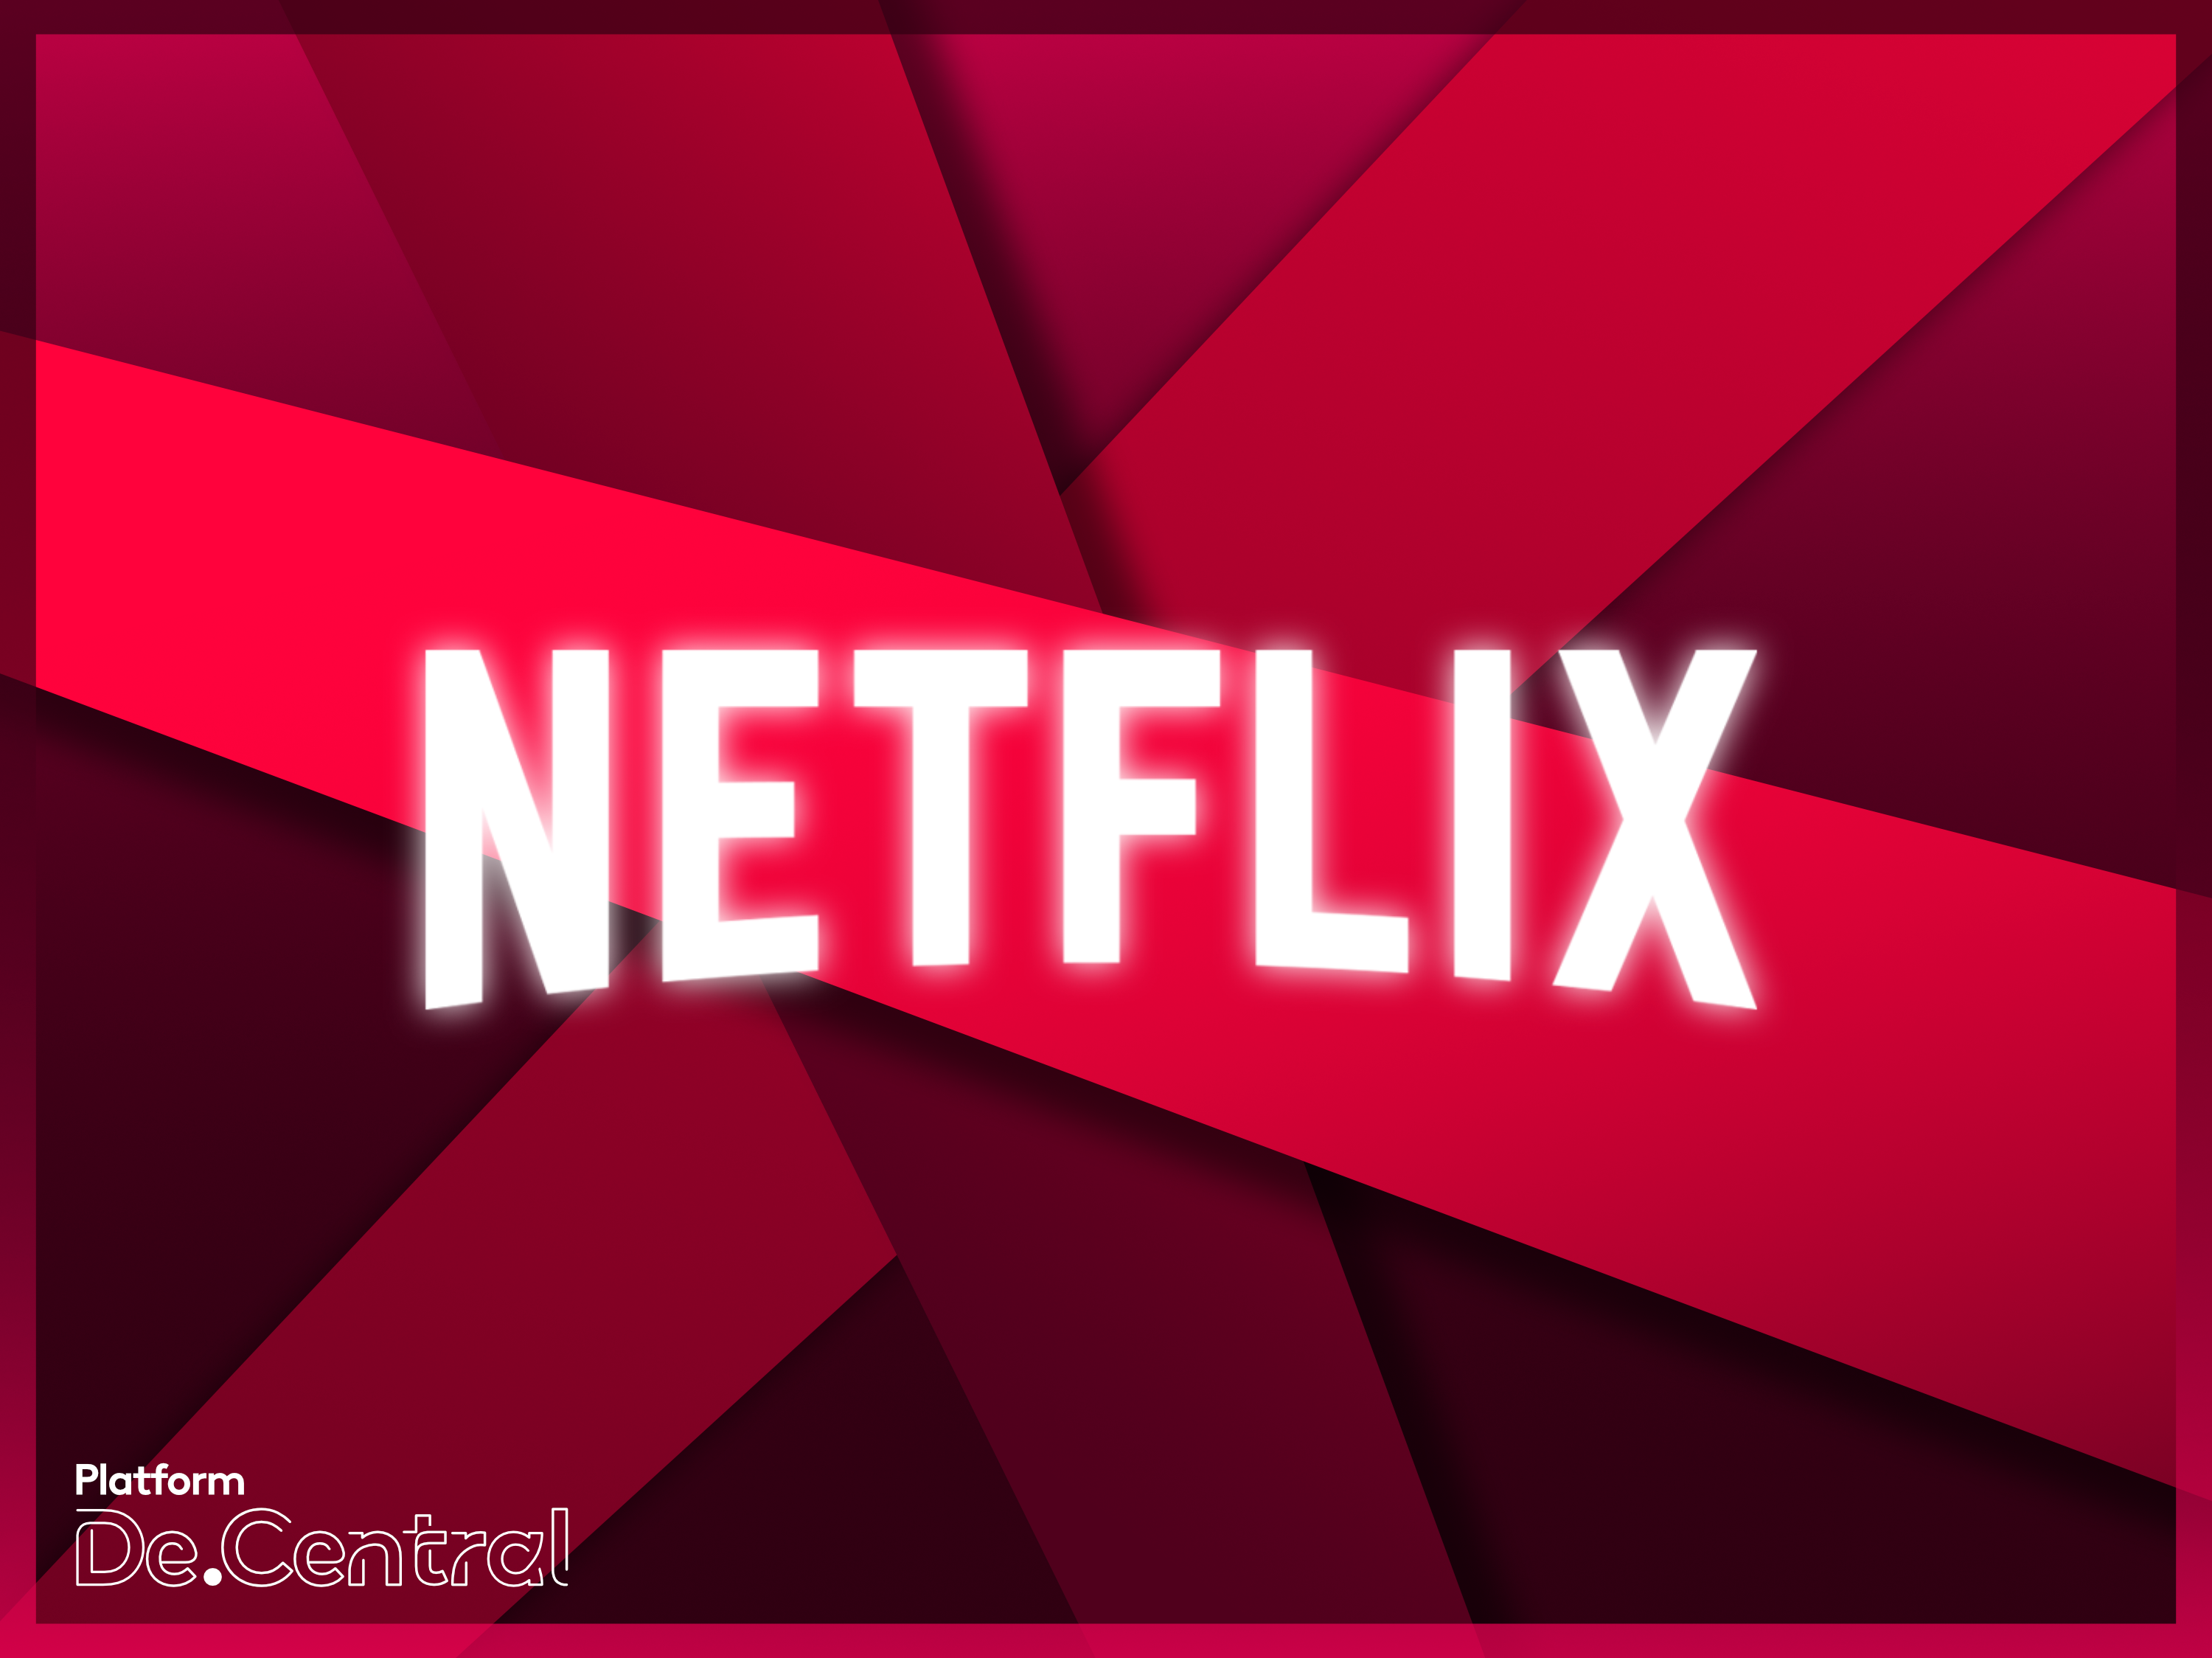 Netflix adds 15.8 million subscribers